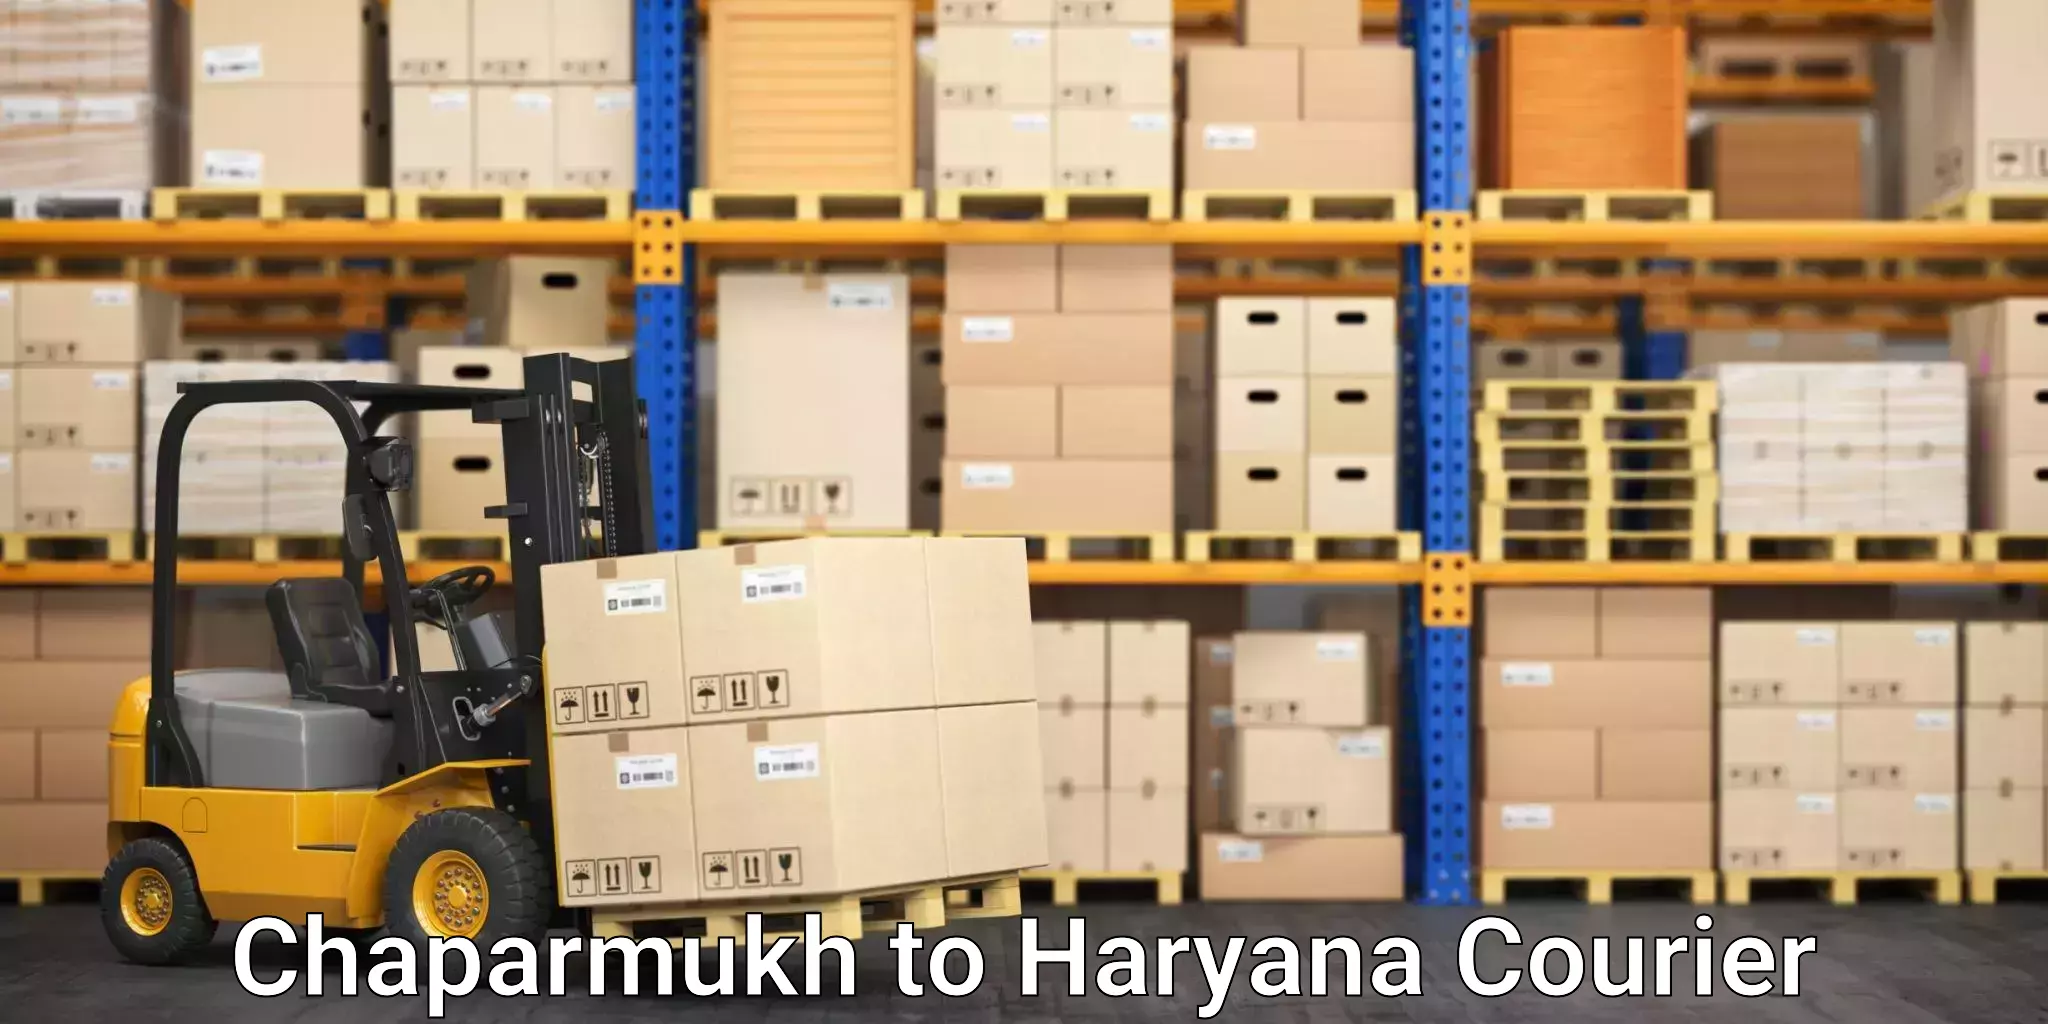 Smart logistics strategies Chaparmukh to Gurgaon